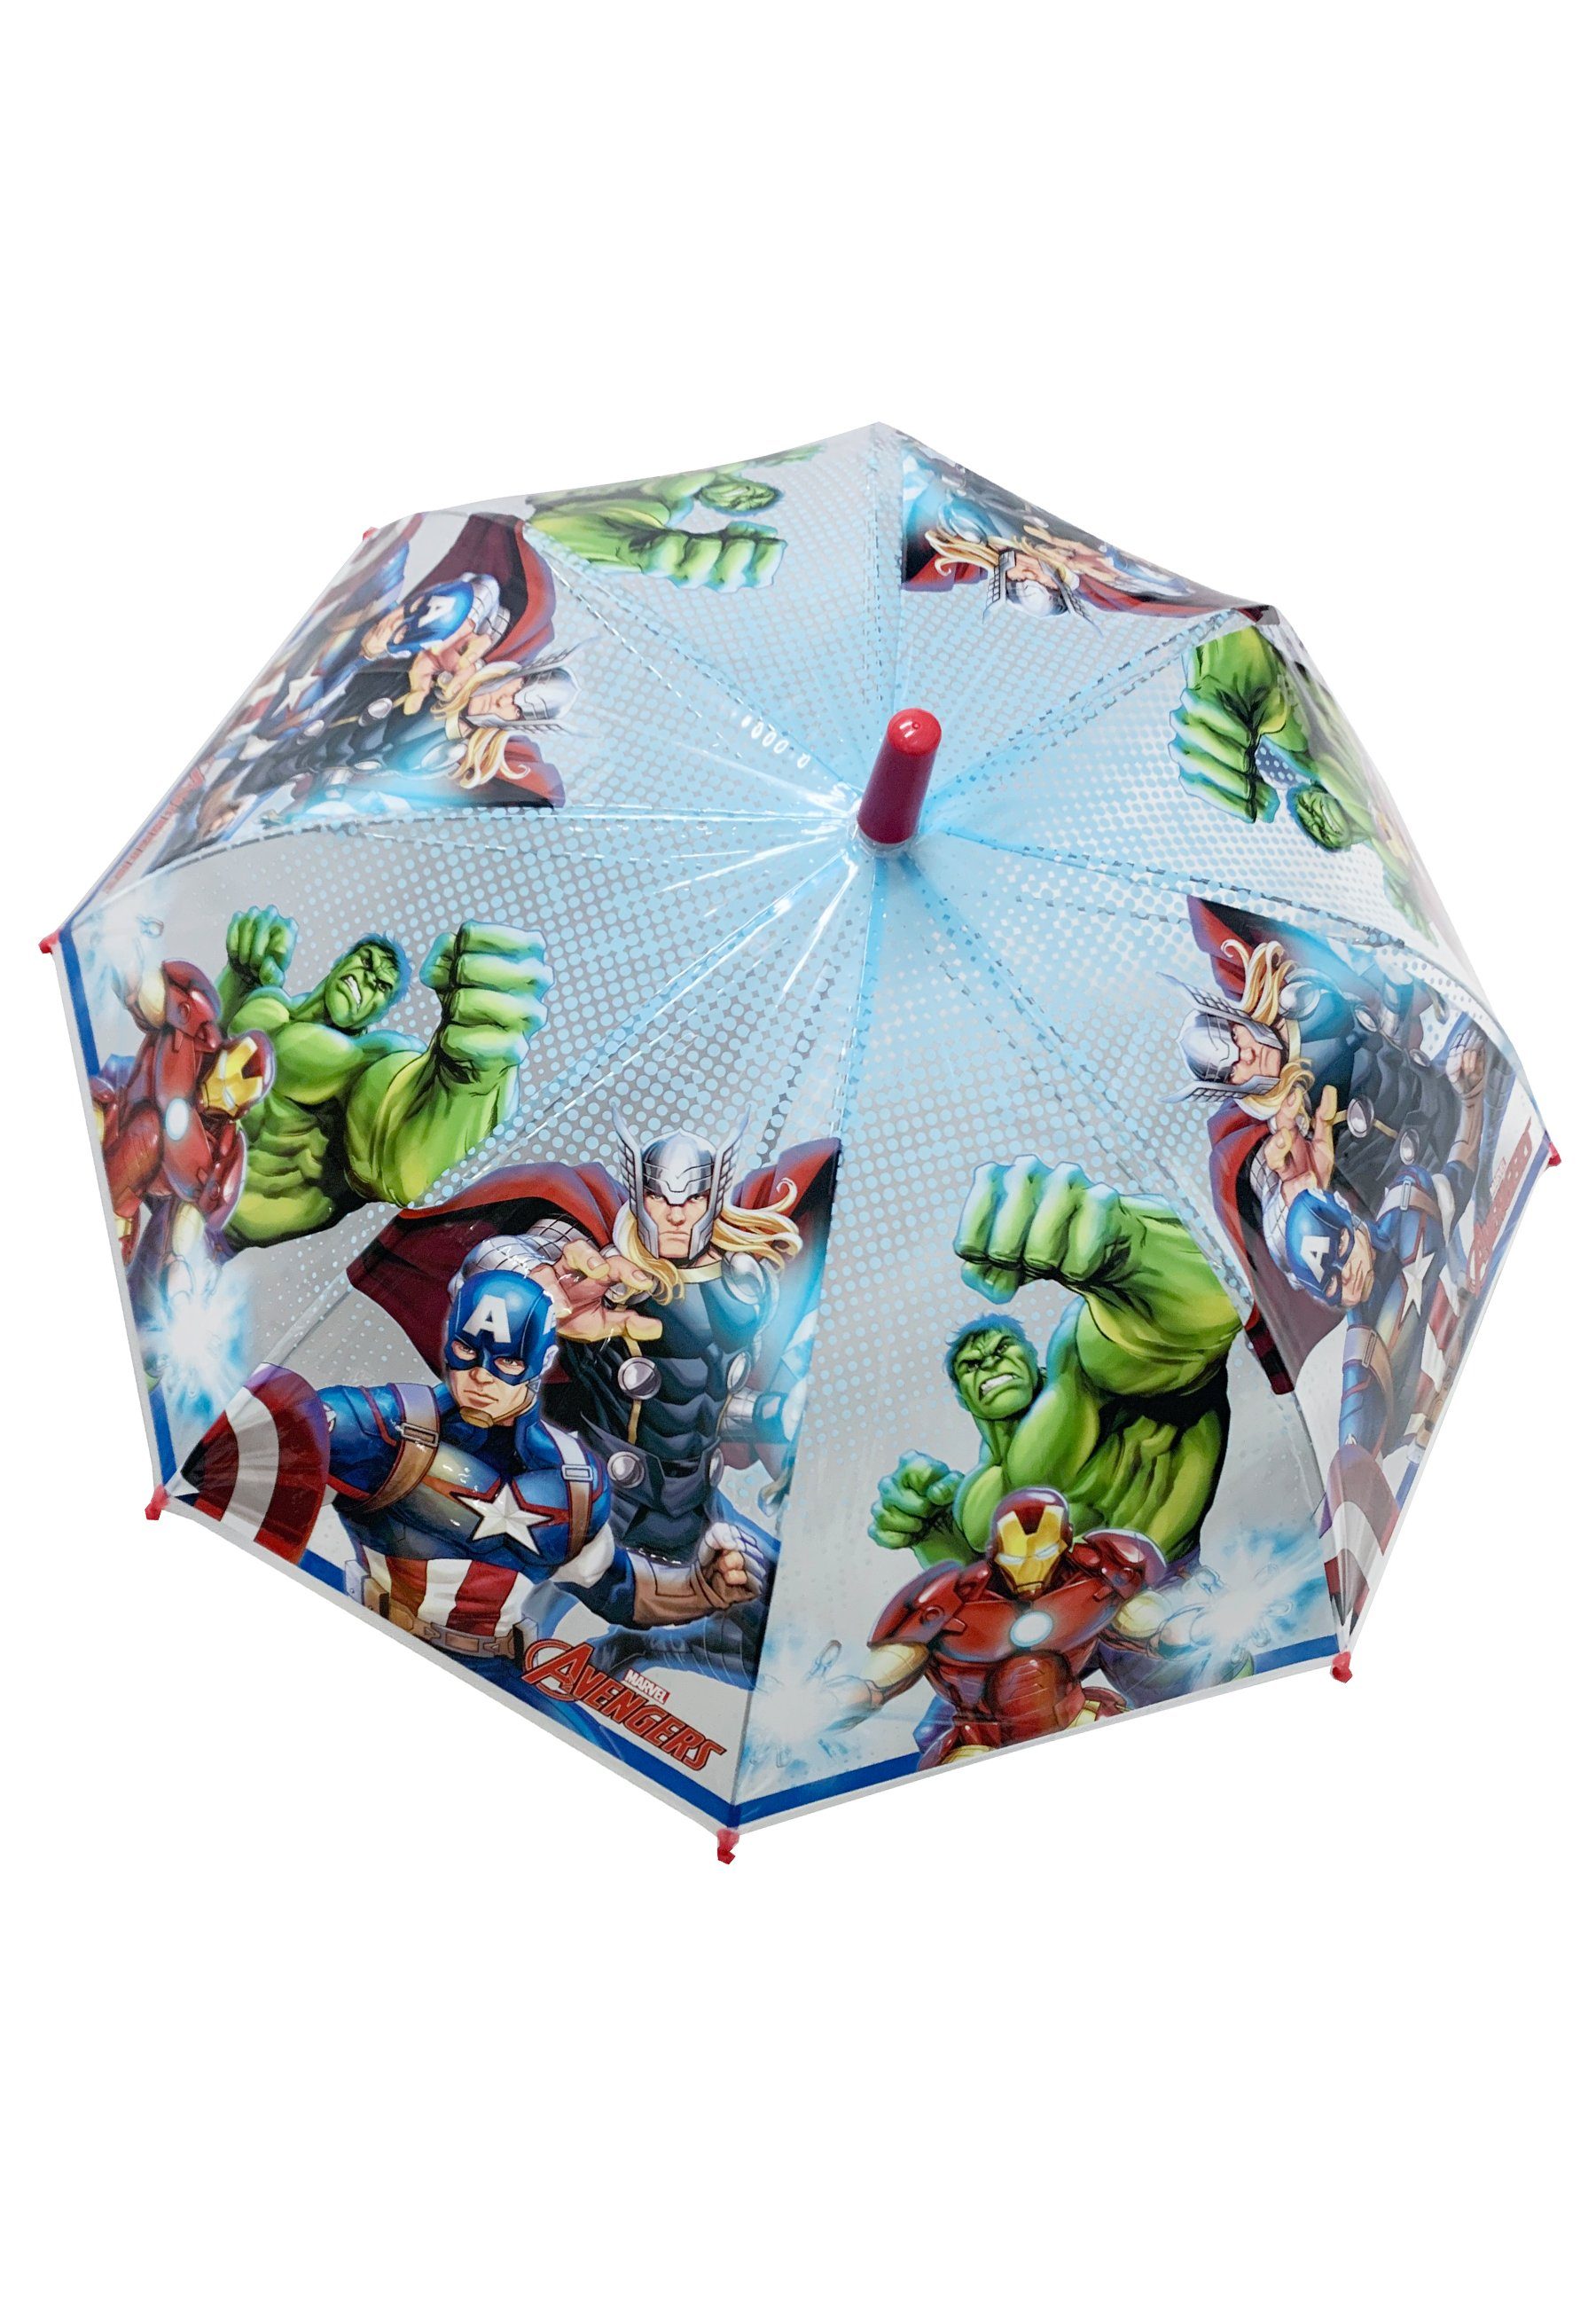 The Stock-Schirm Kuppelschirm Thor Jungen Kinder Stockregenschirm Iron Man AVENGERS Hulk